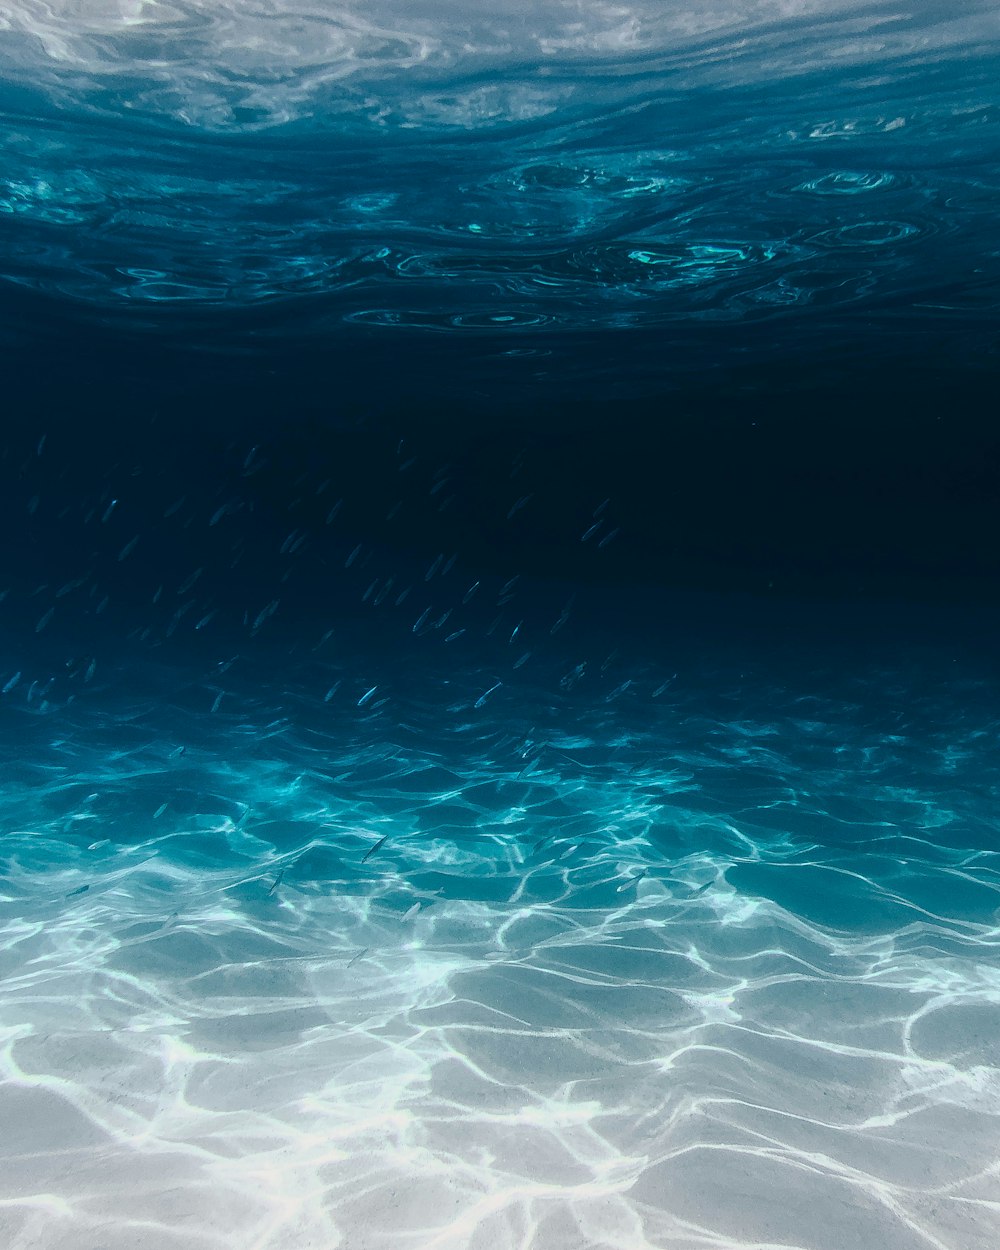 450+ Stunning Blue Ocean Pictures | Download Free Images on Unsplash